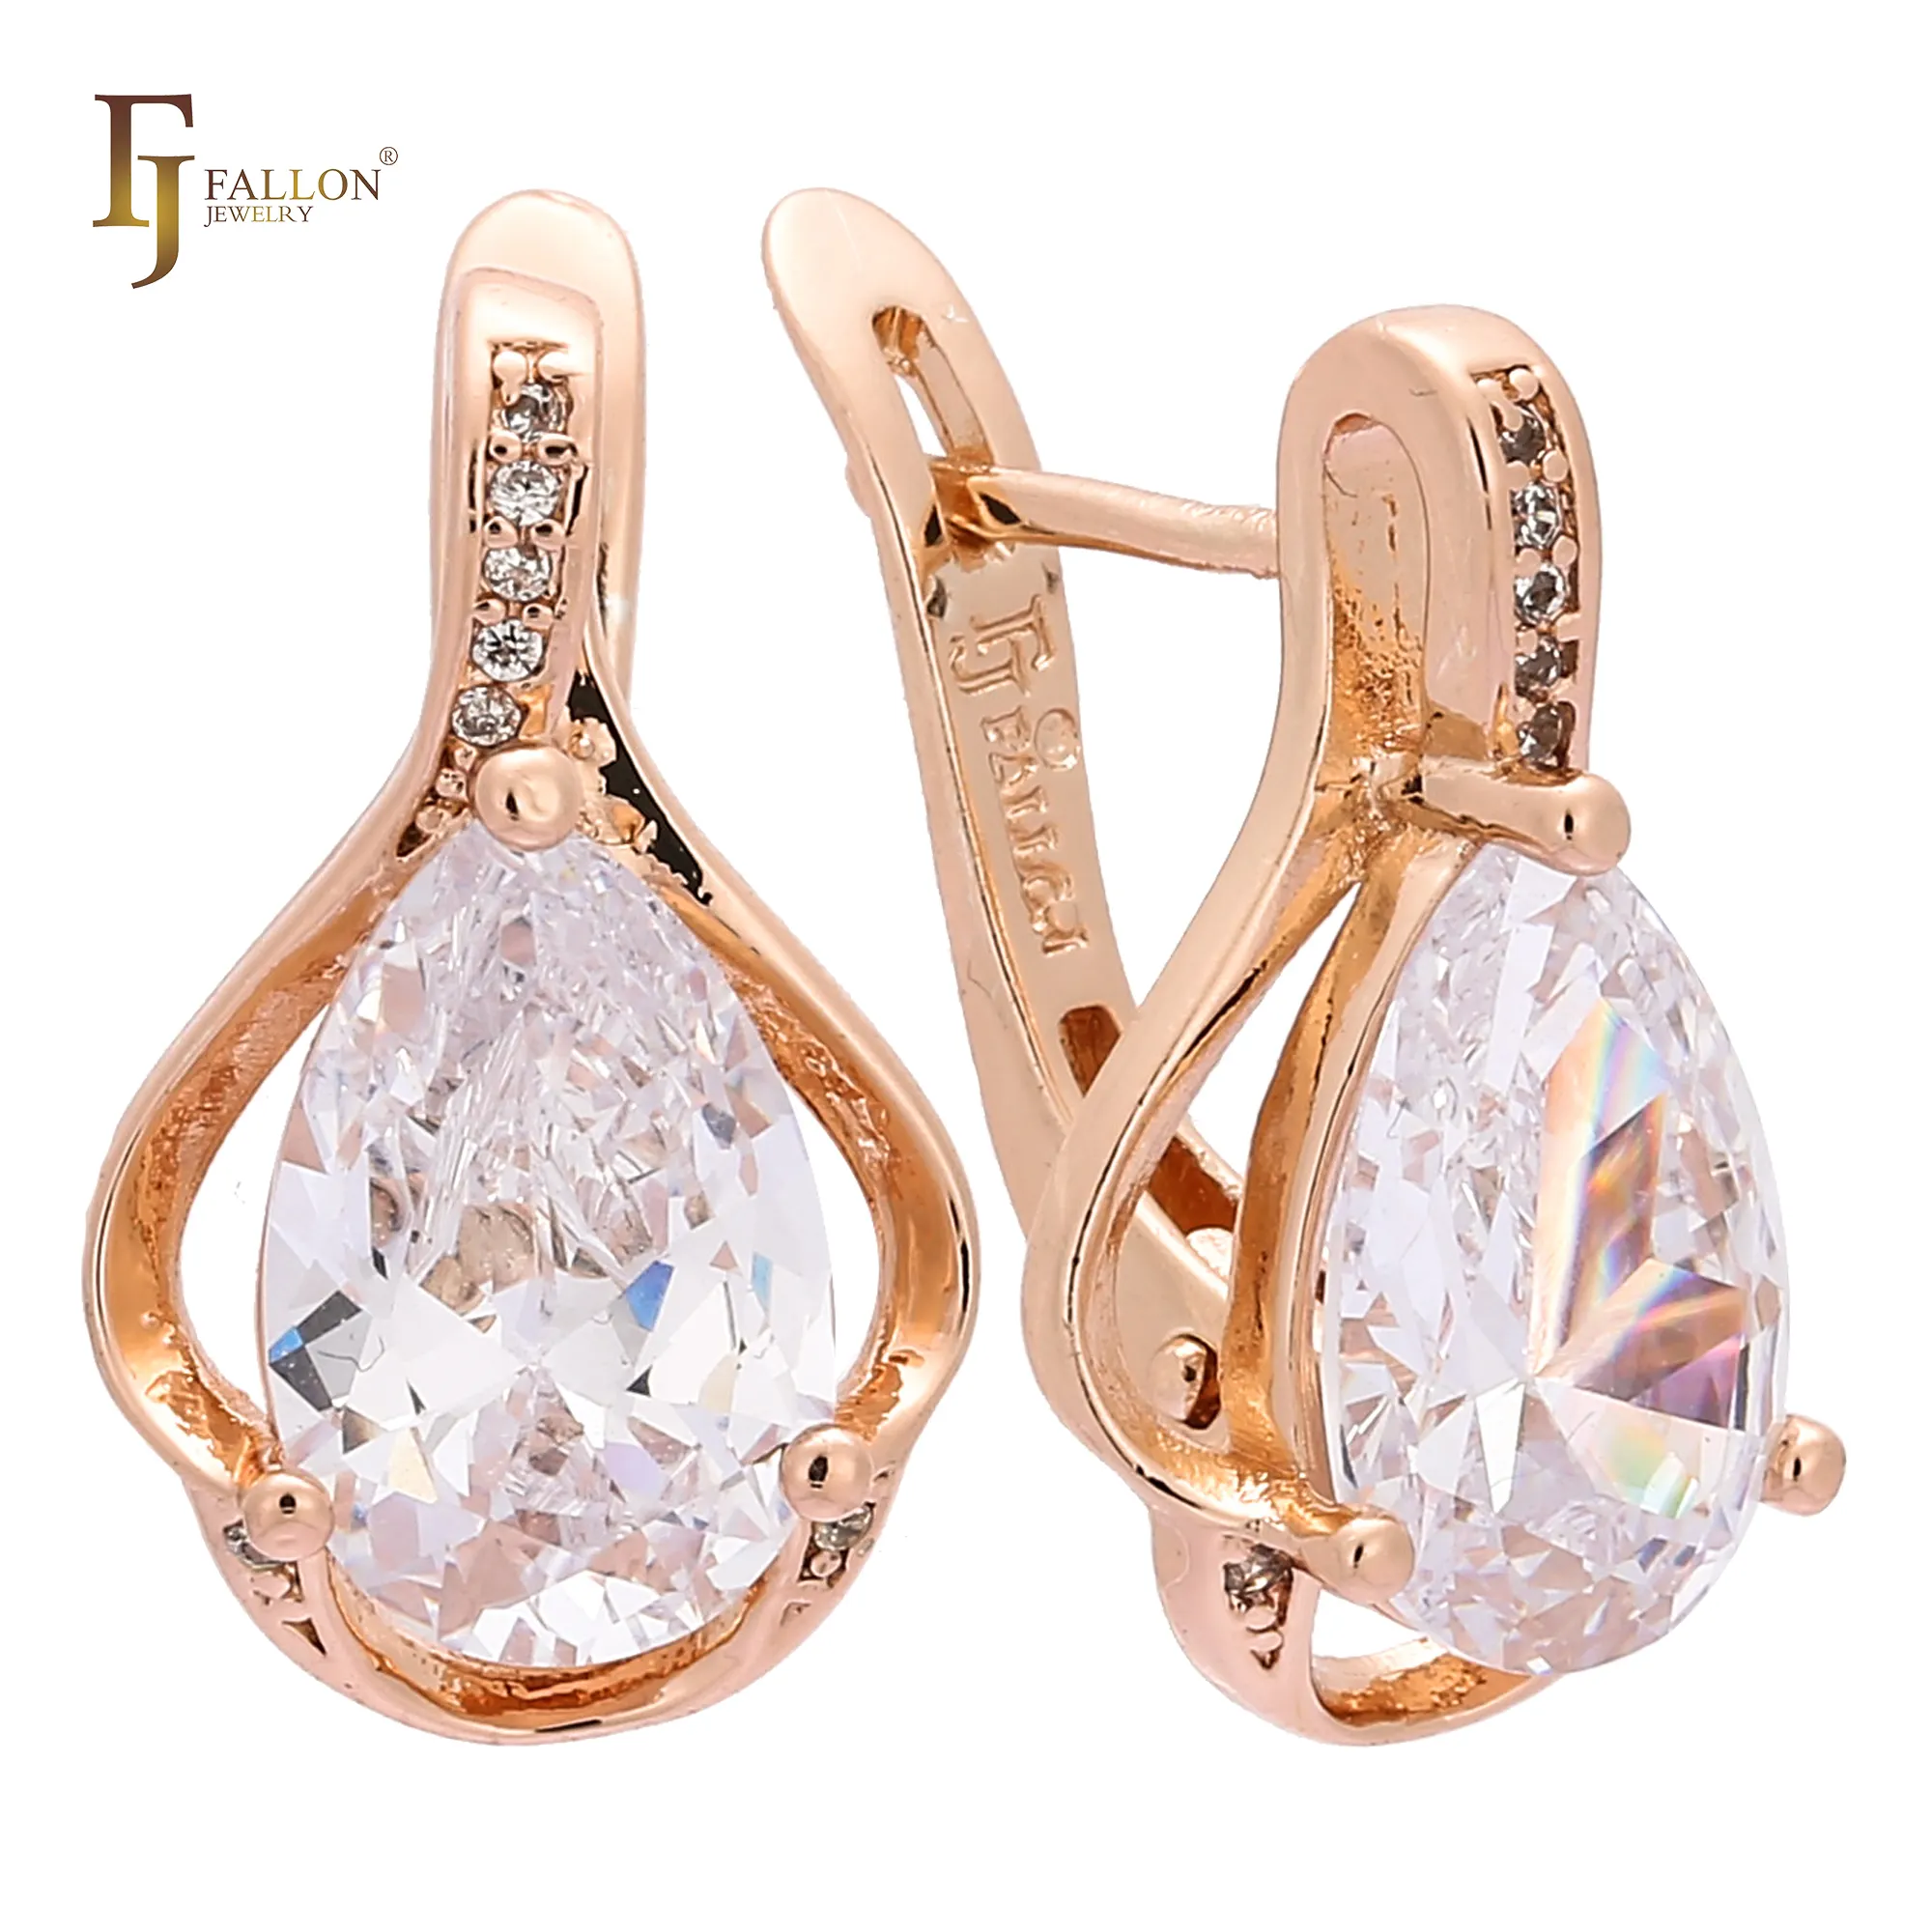 F82201694 FJ Fallon Fashion Jewelry Solitaire Teardrop Earrings Plated In Rose Gold Brass Based